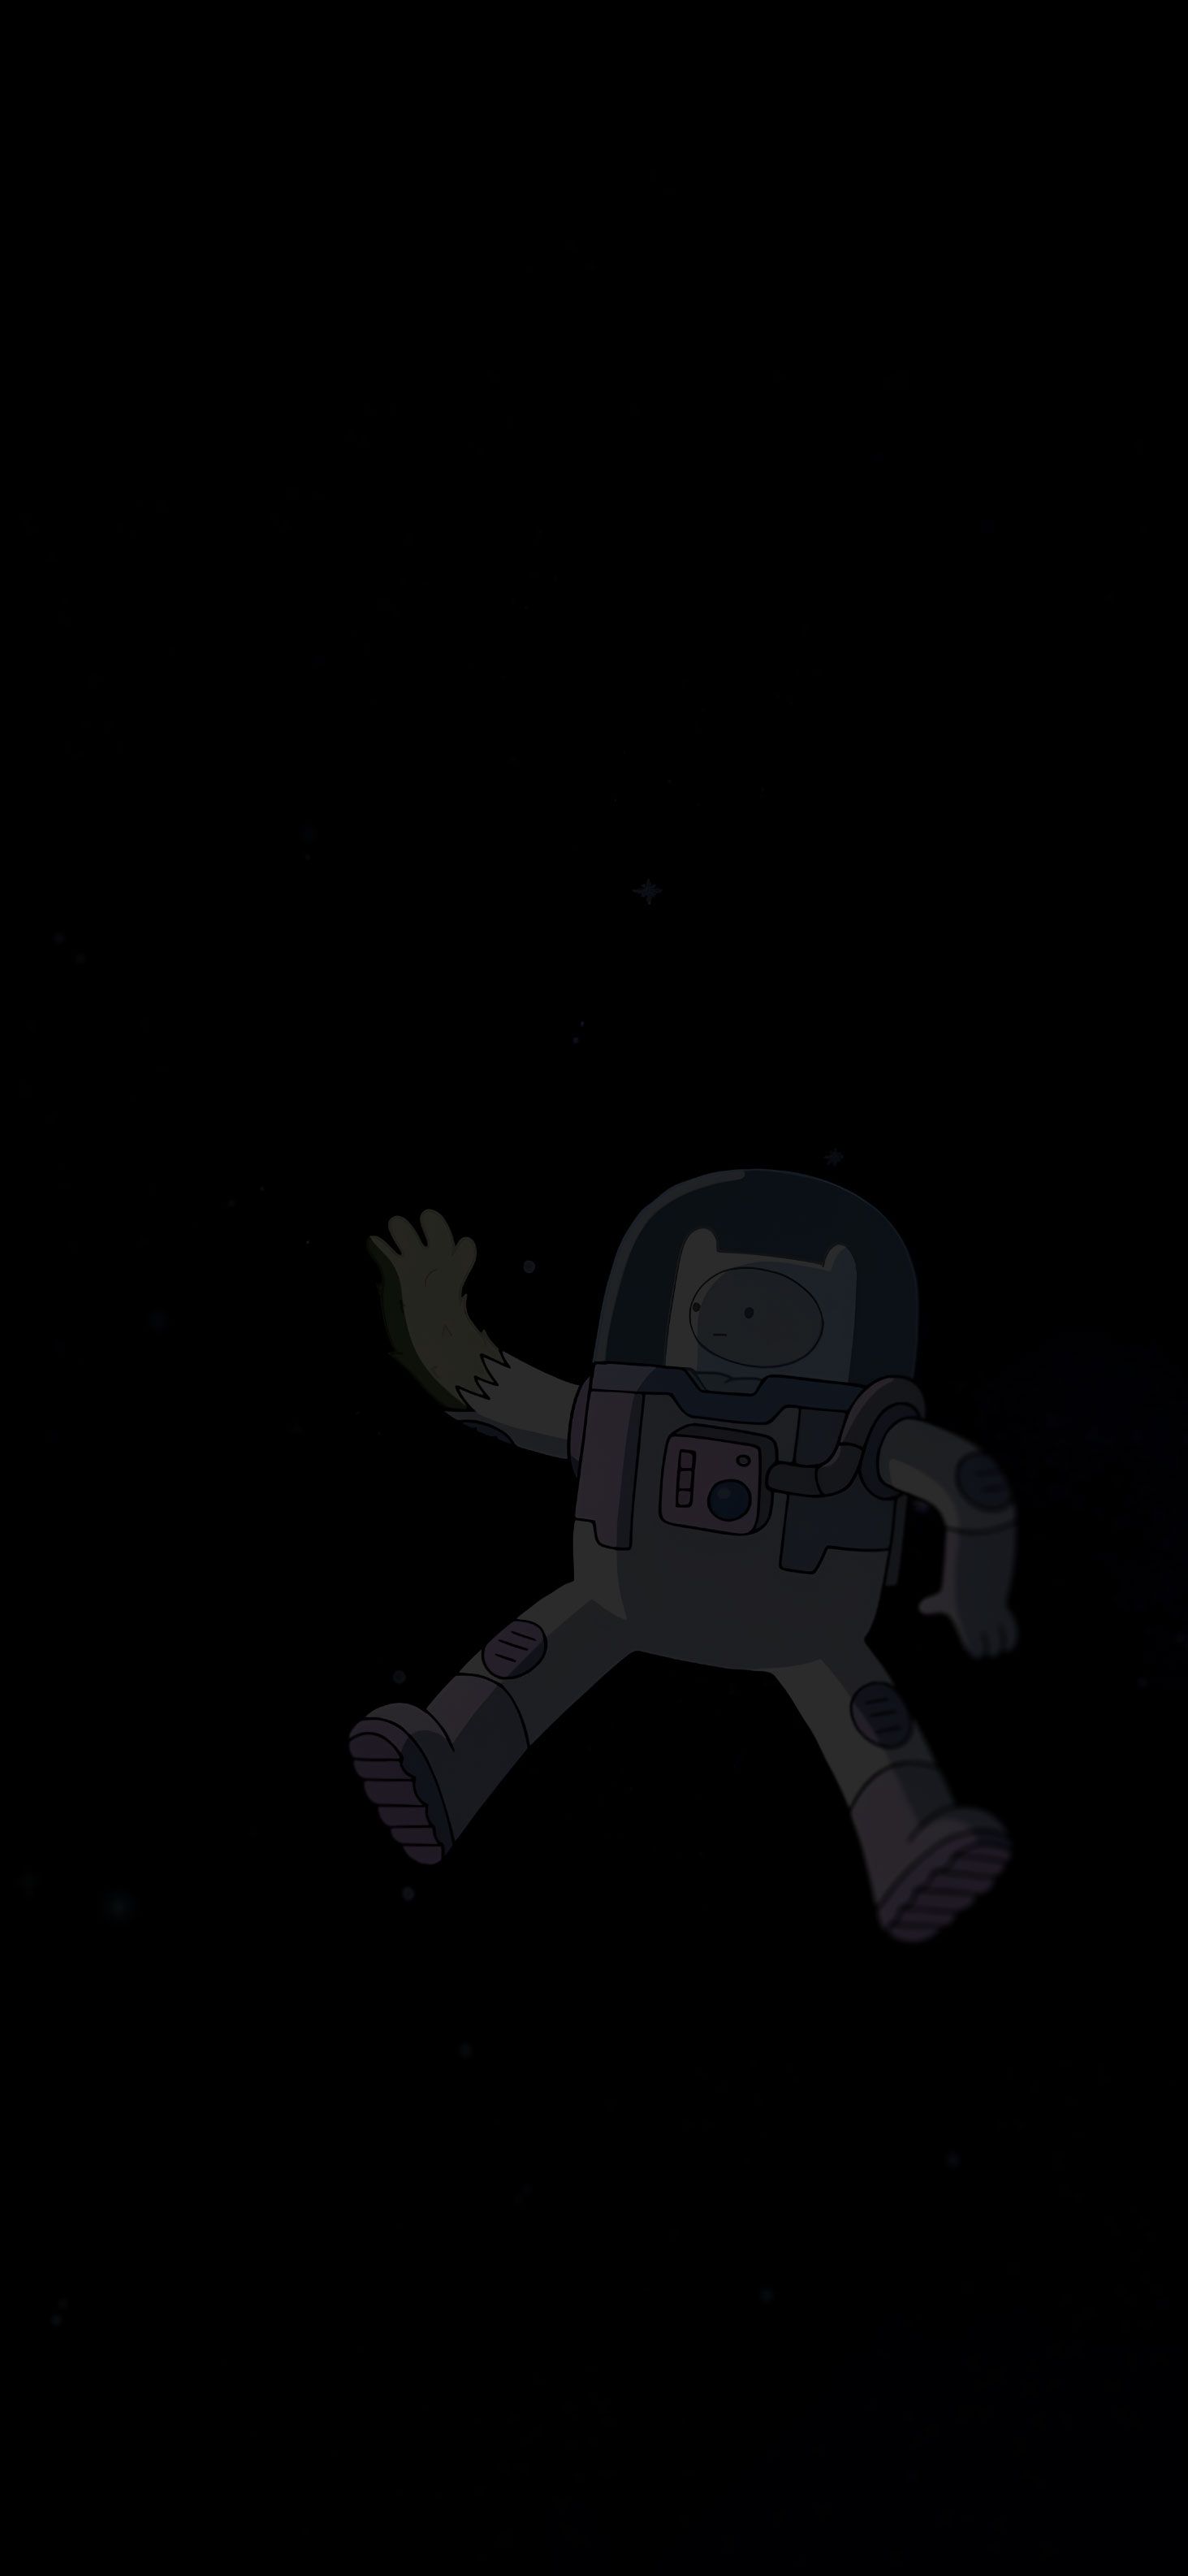 Adventure Time Finn in space wallpaper - Adventure Time